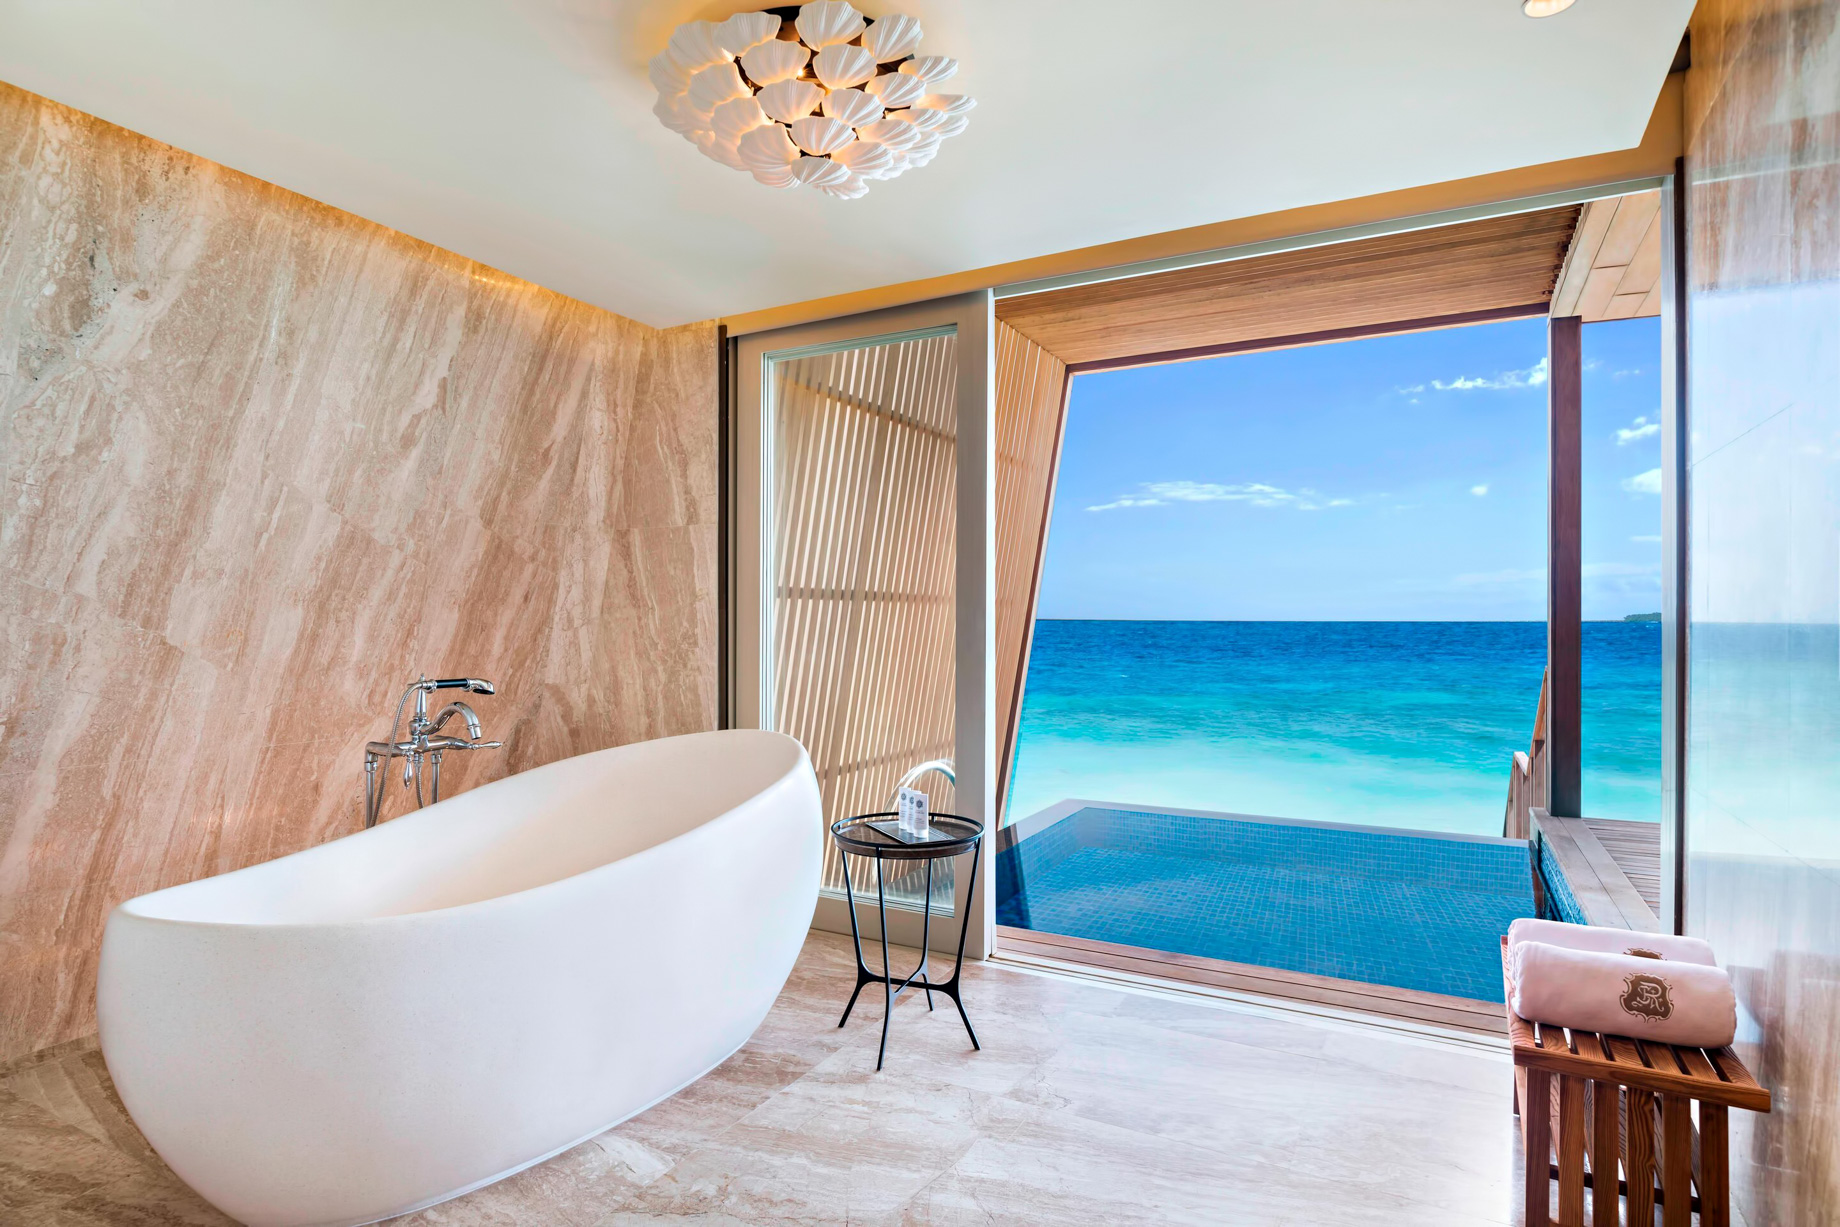 The St. Regis Maldives Vommuli Resort – Dhaalu Atoll, Maldives – Two Bedroom Beach Villa Bathroom